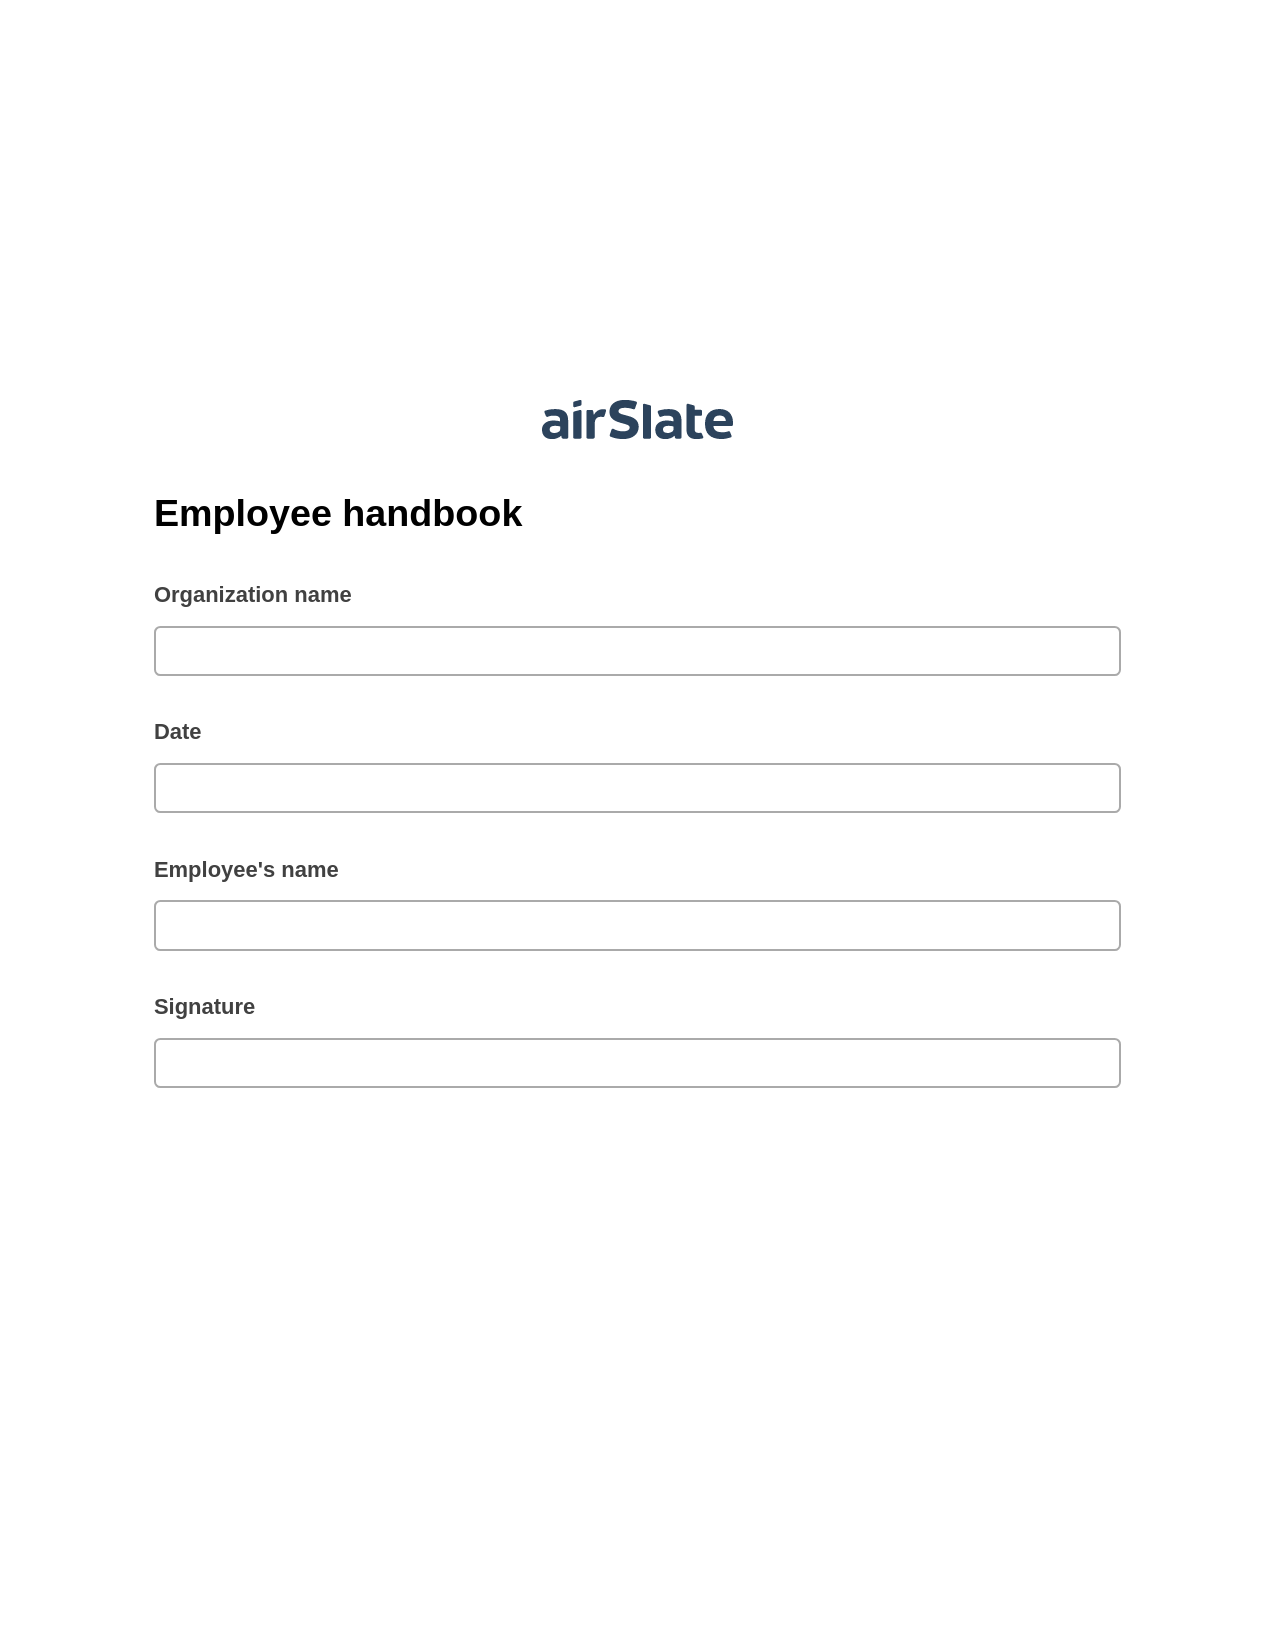 Multirole Employee handbook Pre-fill from another Slate Bot, Create MS Dynamics 365 Records Bot, Dropbox Bot